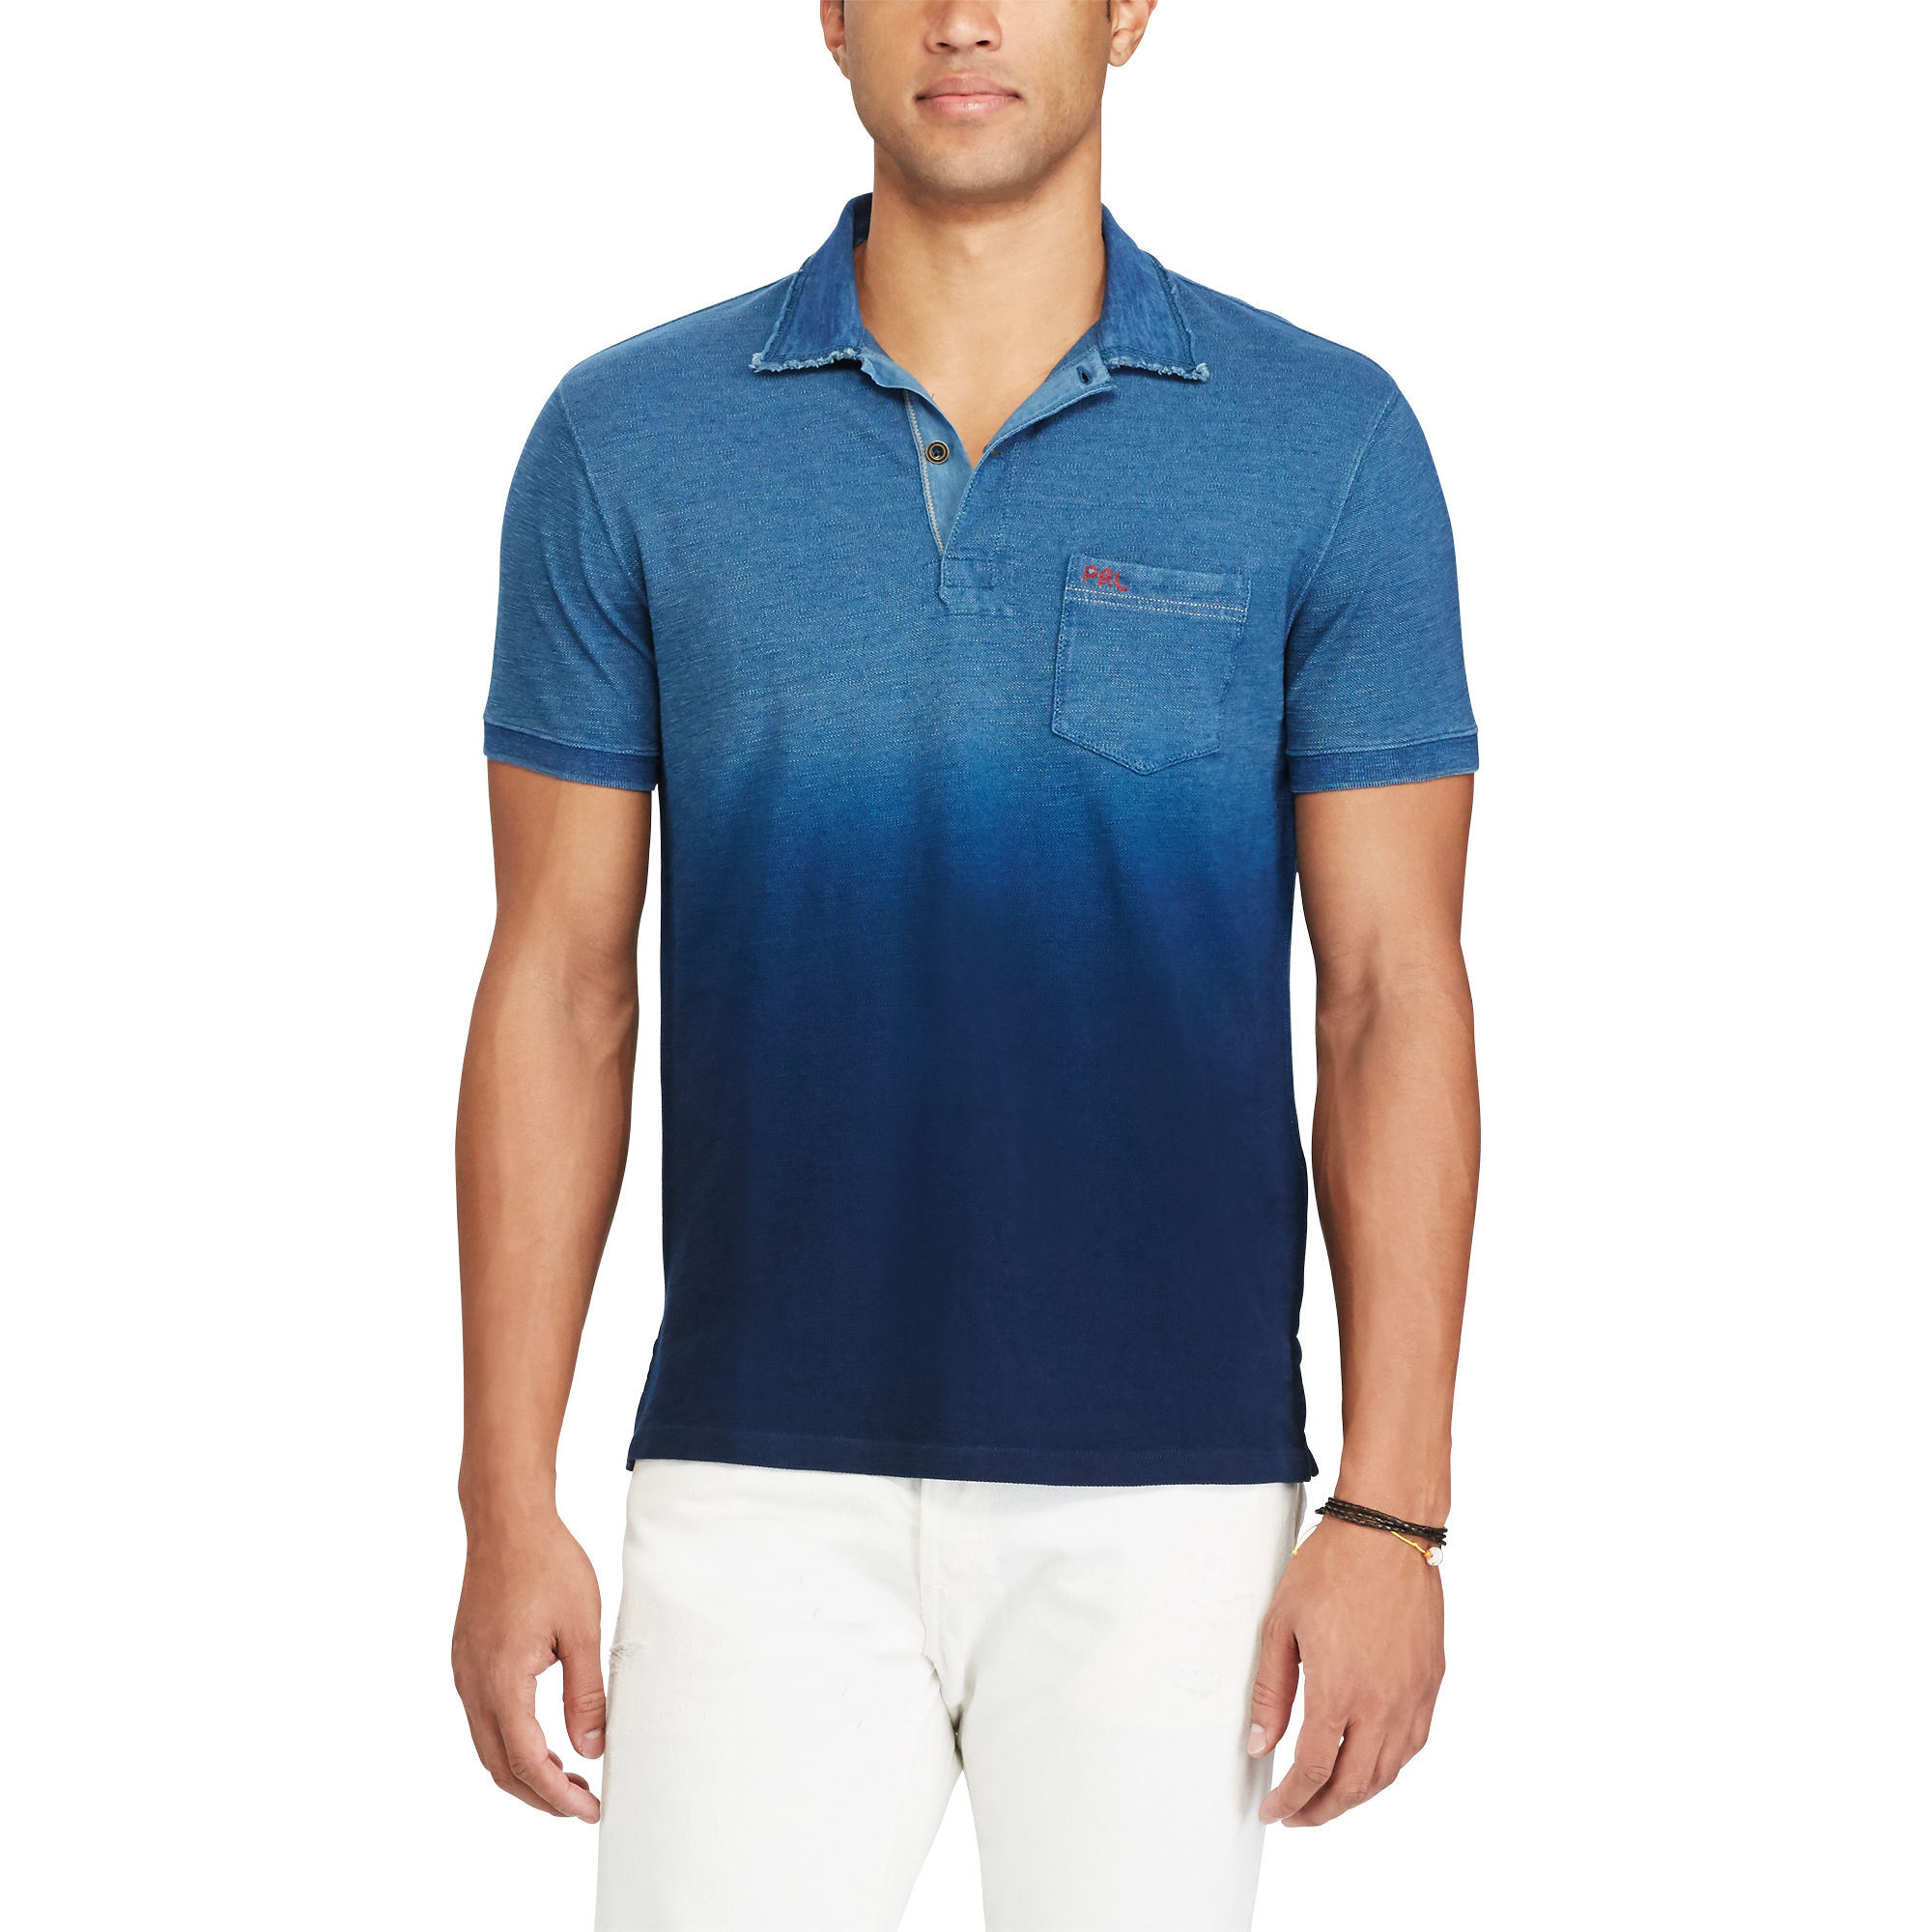 Two Color Men's Hampton Classic Fit Polo Tshirt